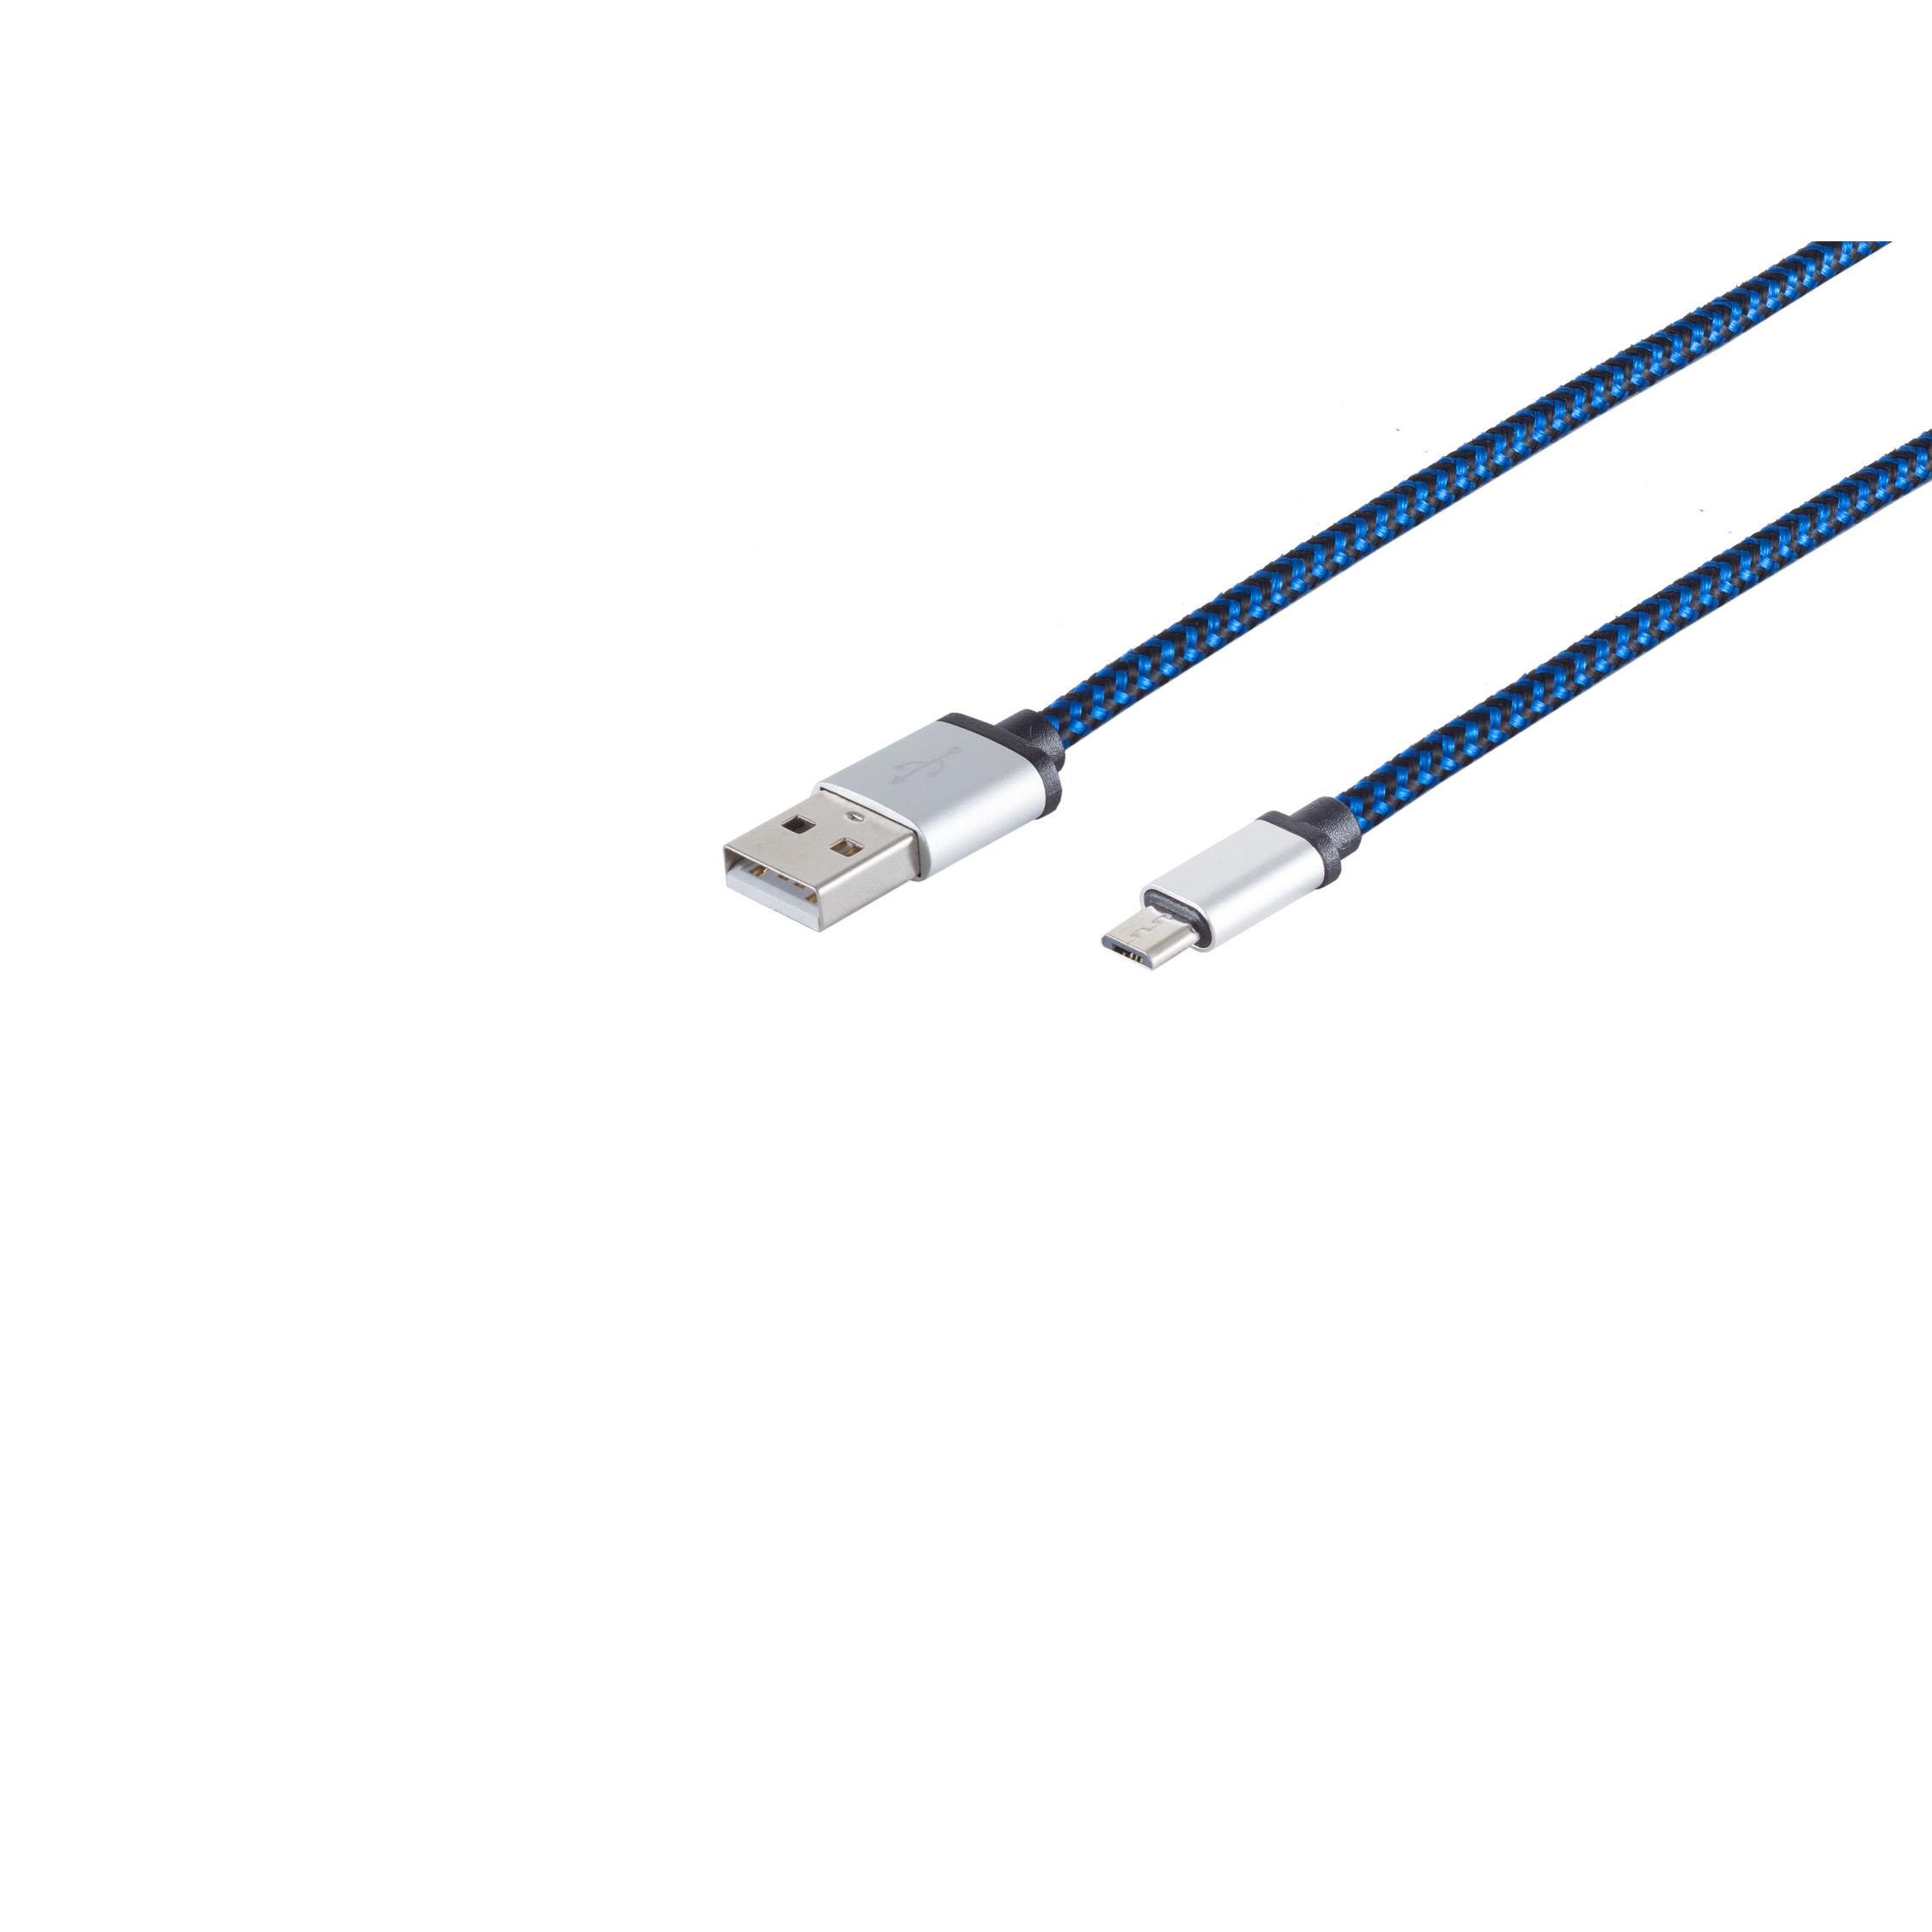 A CONNECTIVITY Kabel auf MAXIMUM B, 0,3m Micro S/CONN USB-Ladekabel Stecker USB blau